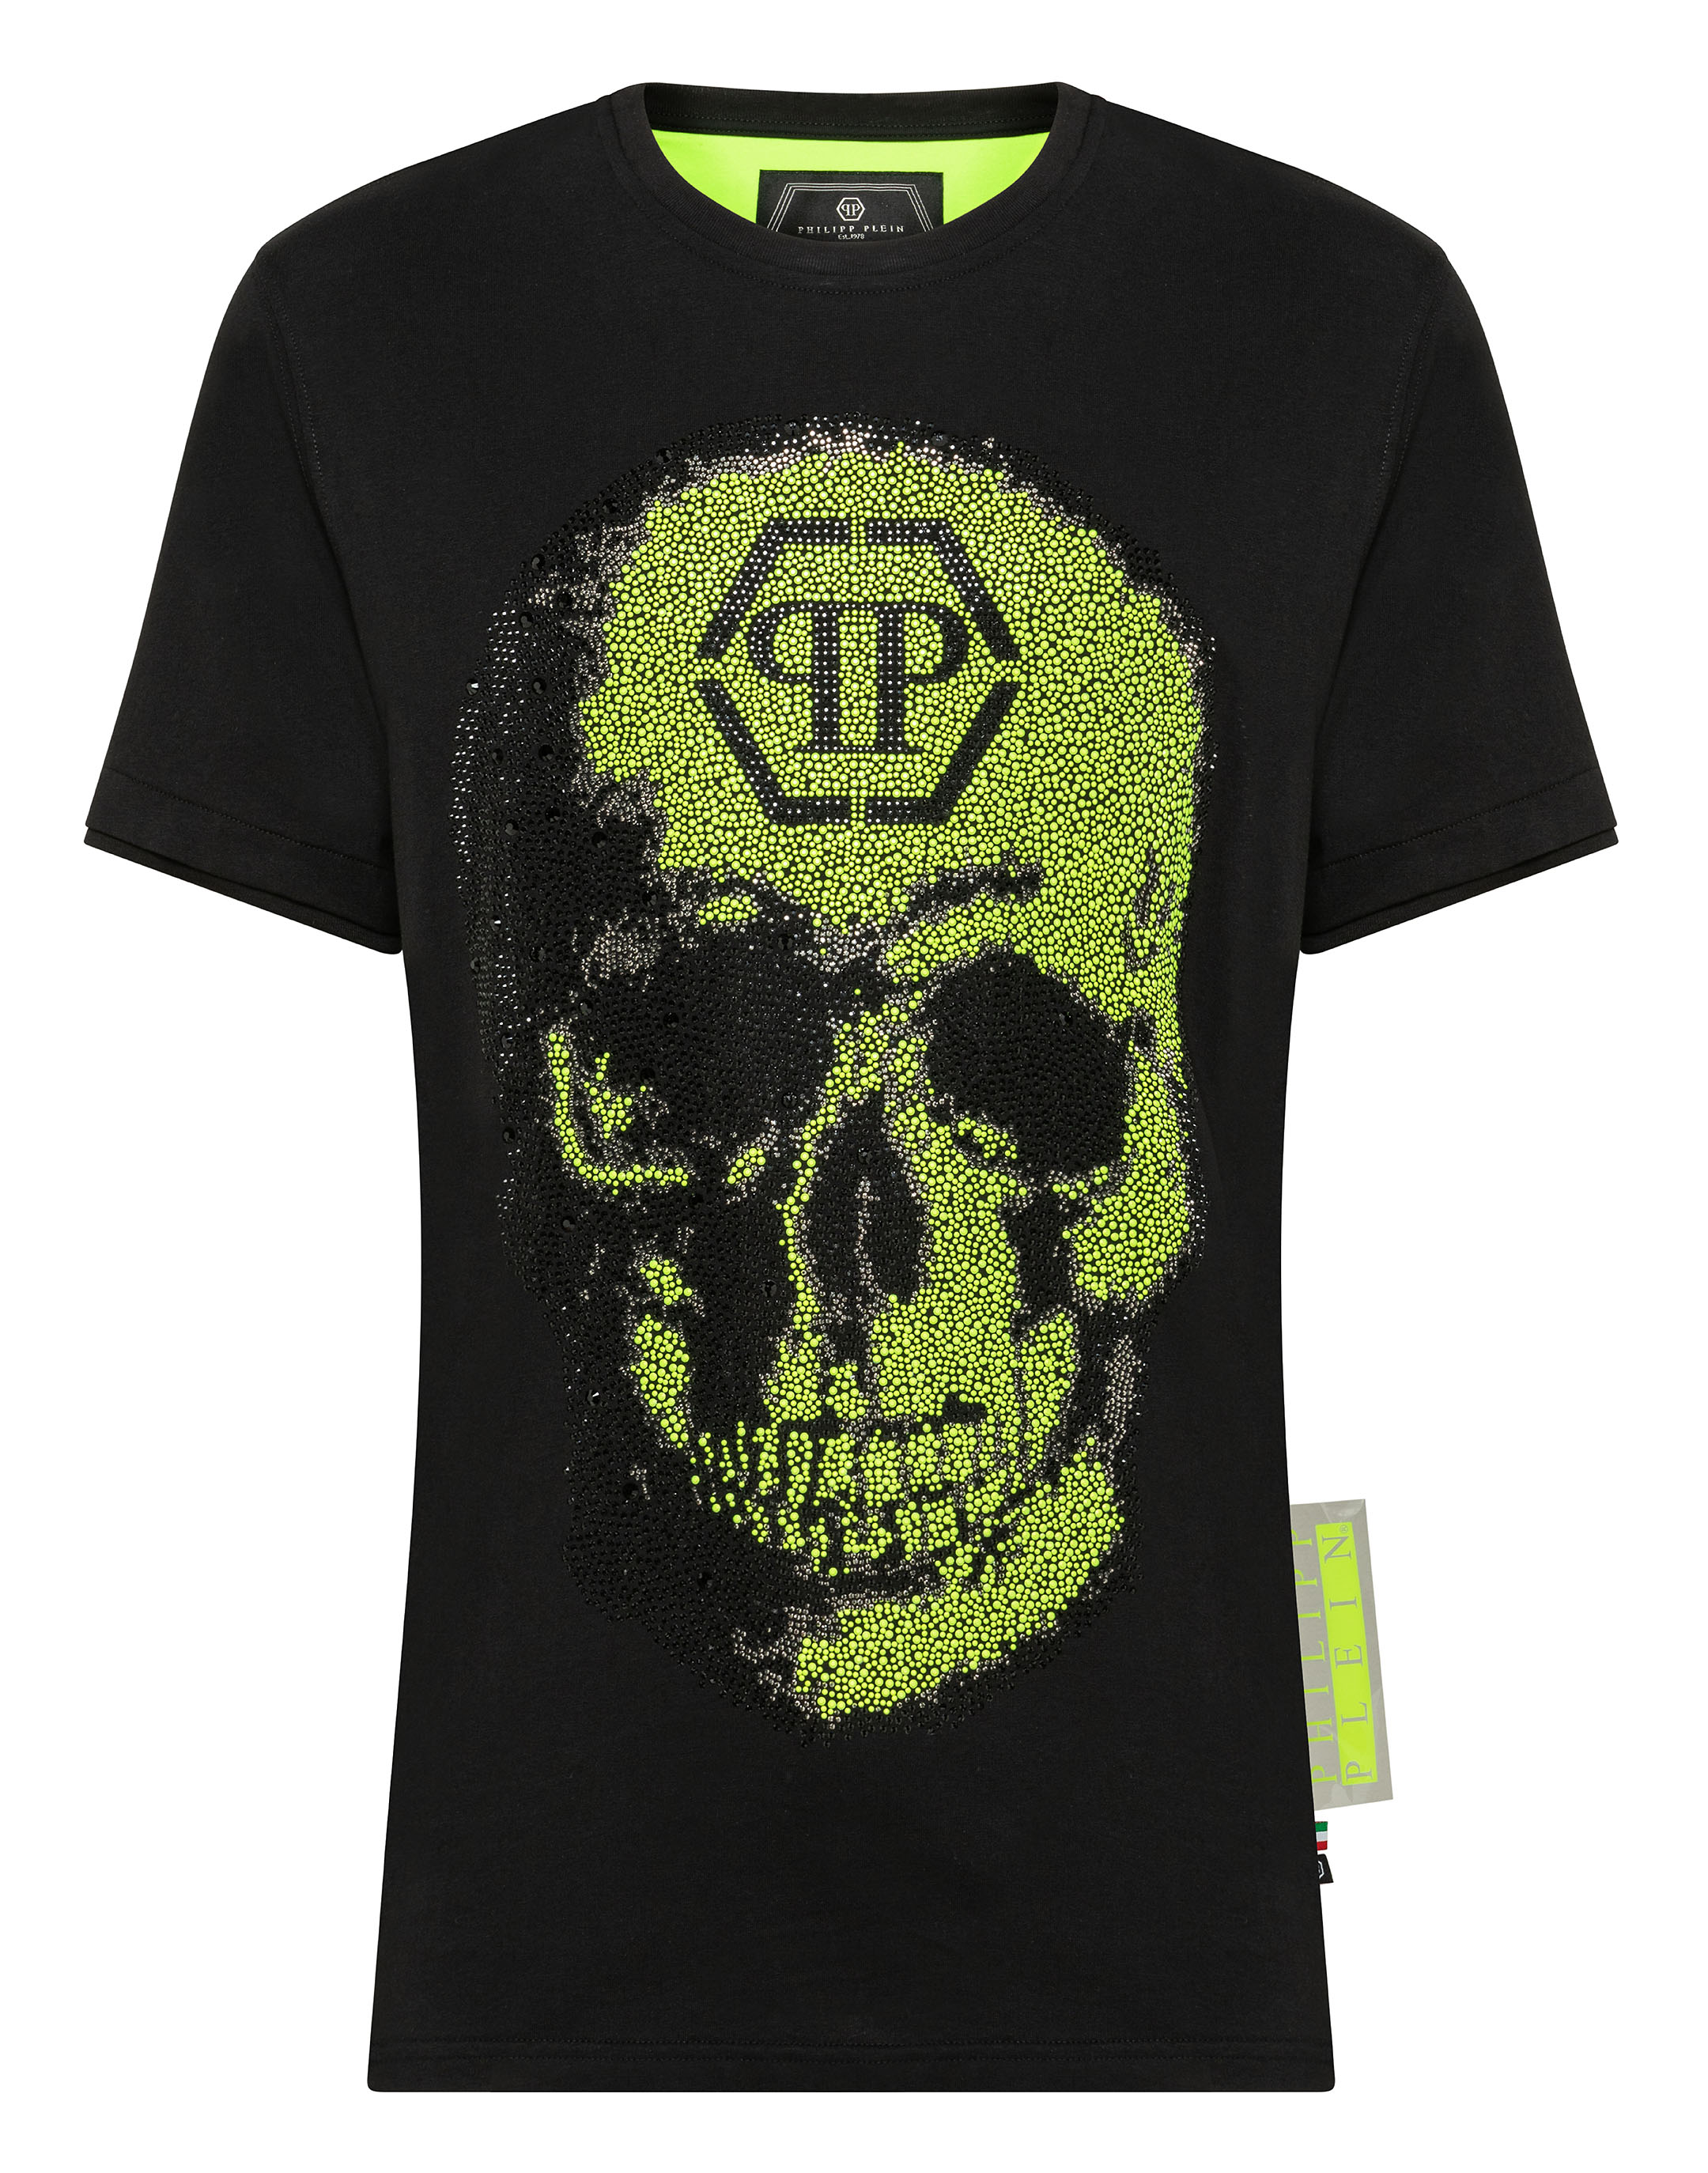 philipp plein t shirt green skull